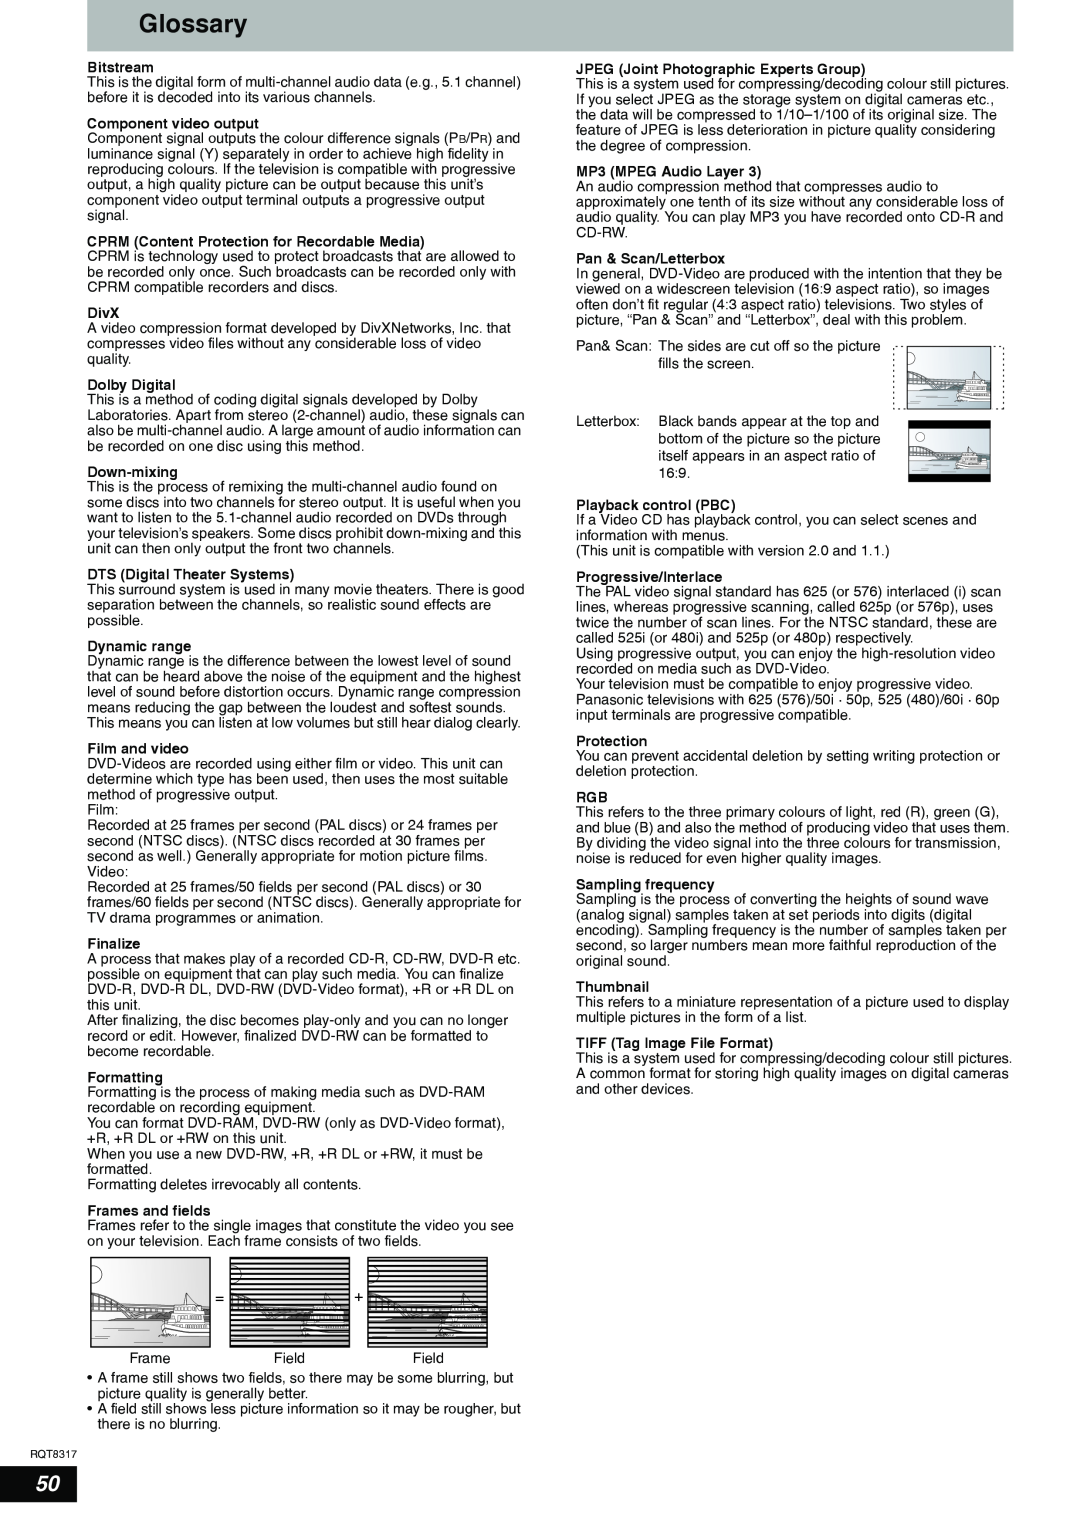 Panasonic DMR-ES15 manual Glossary 